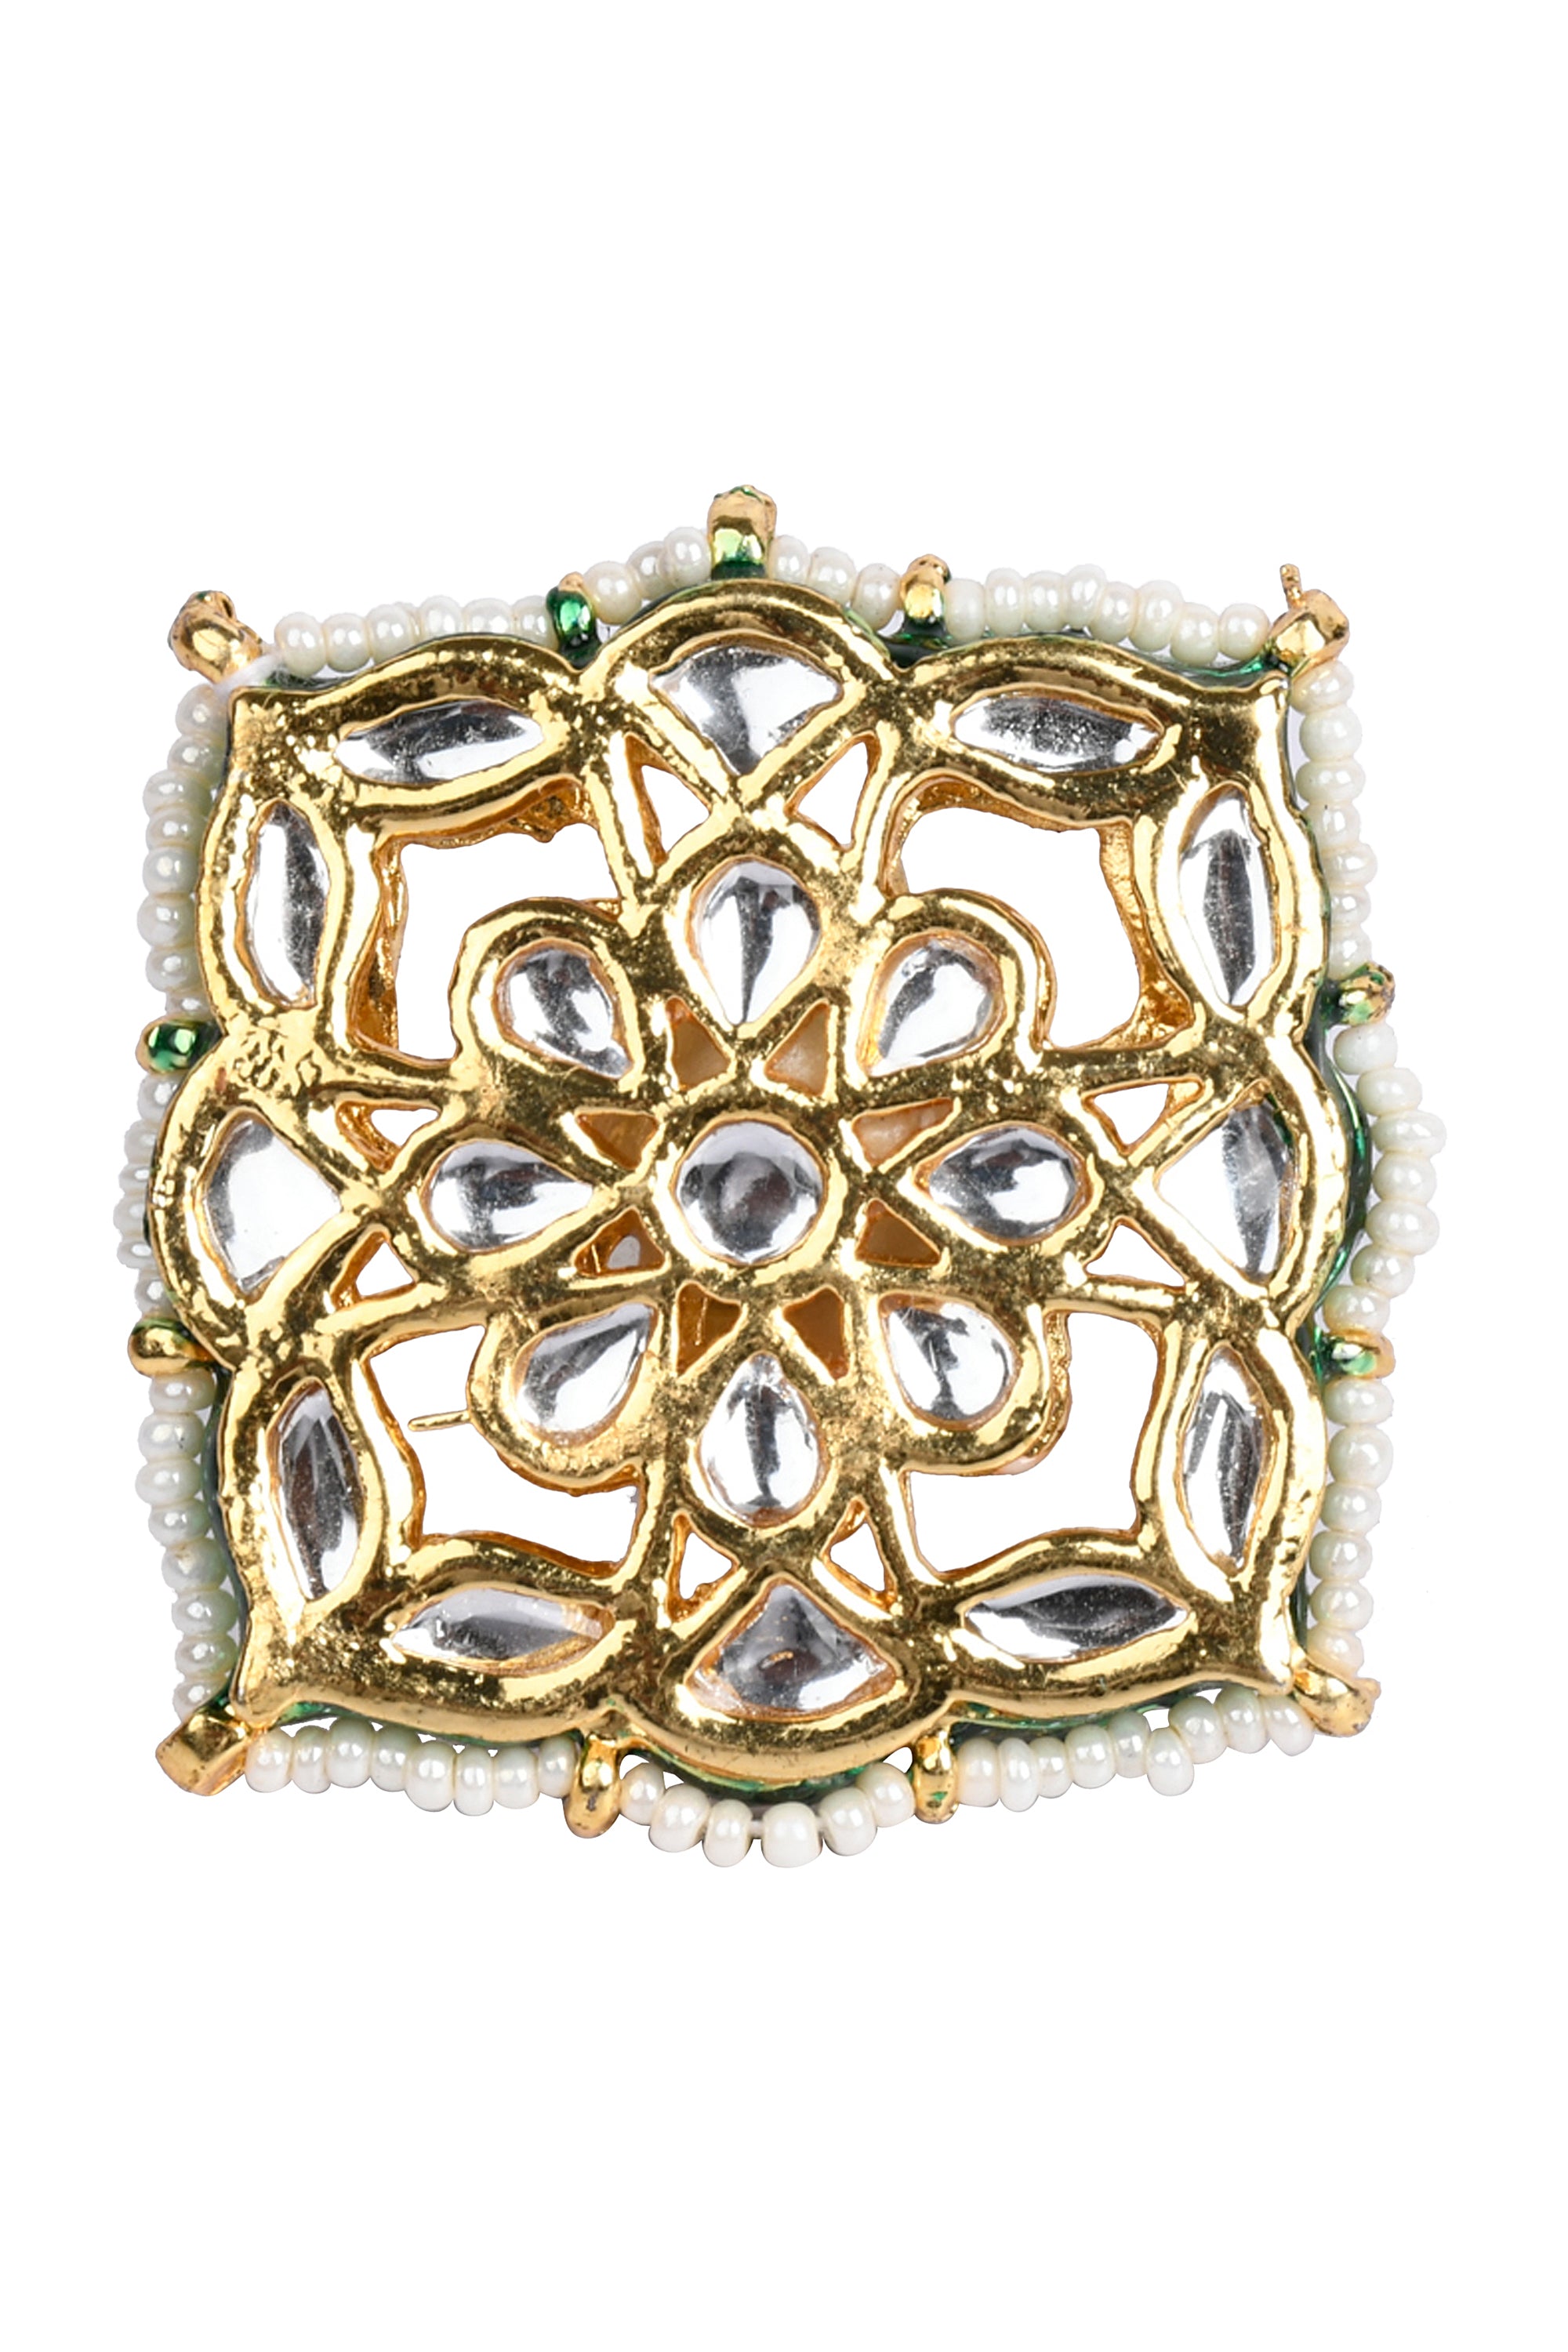 Women's Gold Tone Kundan Adjustable Ring With Pearls - Femizen